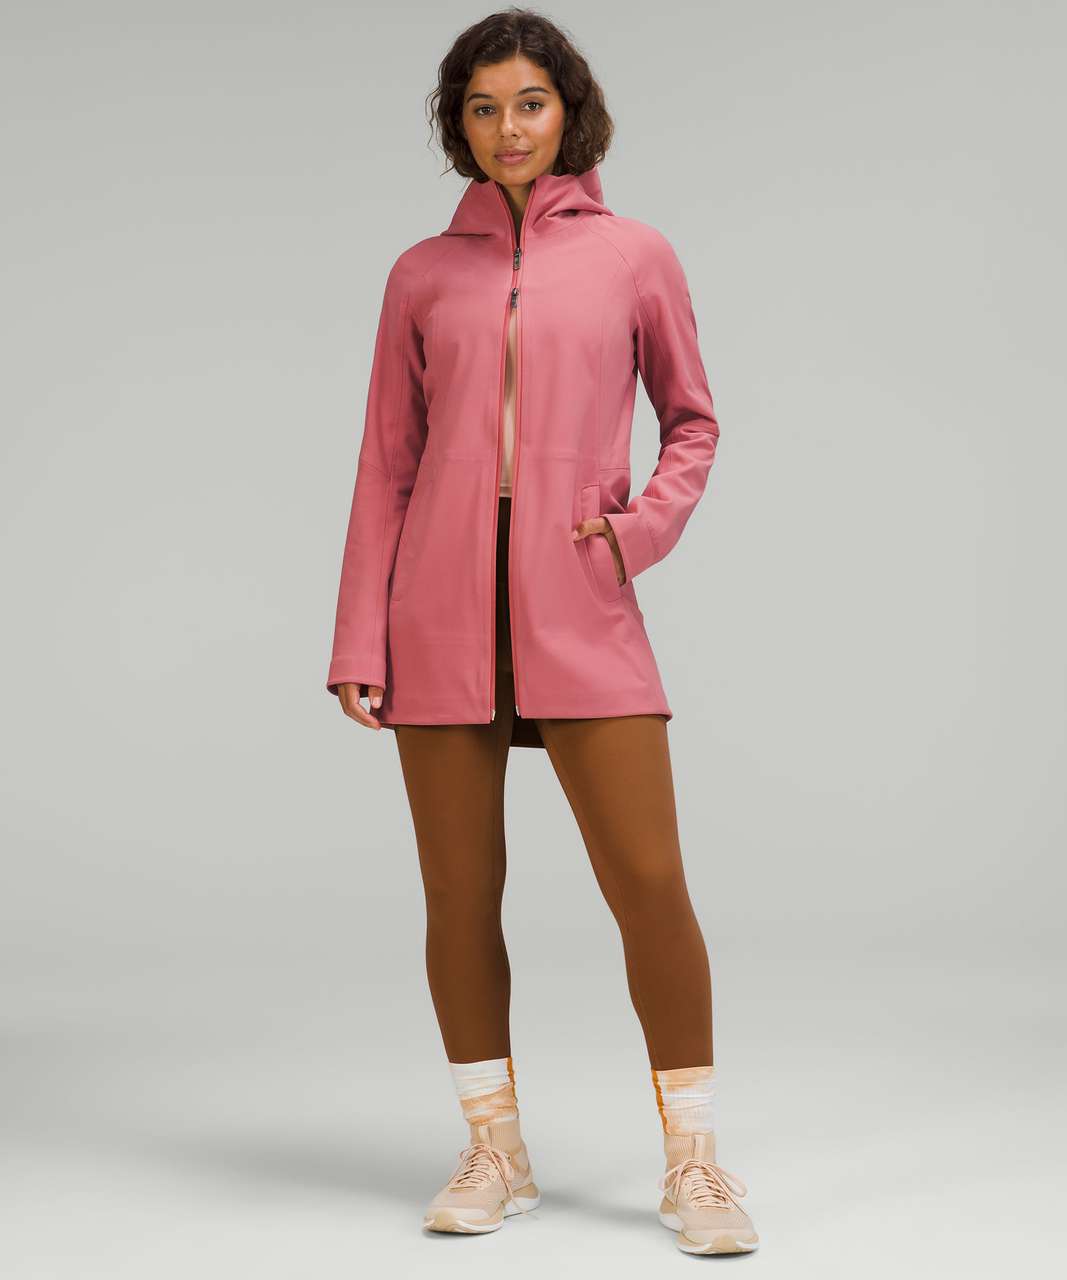 NEW Women Lululemon Cross Chill Jacket RepelShell Pink Taupe Size 8